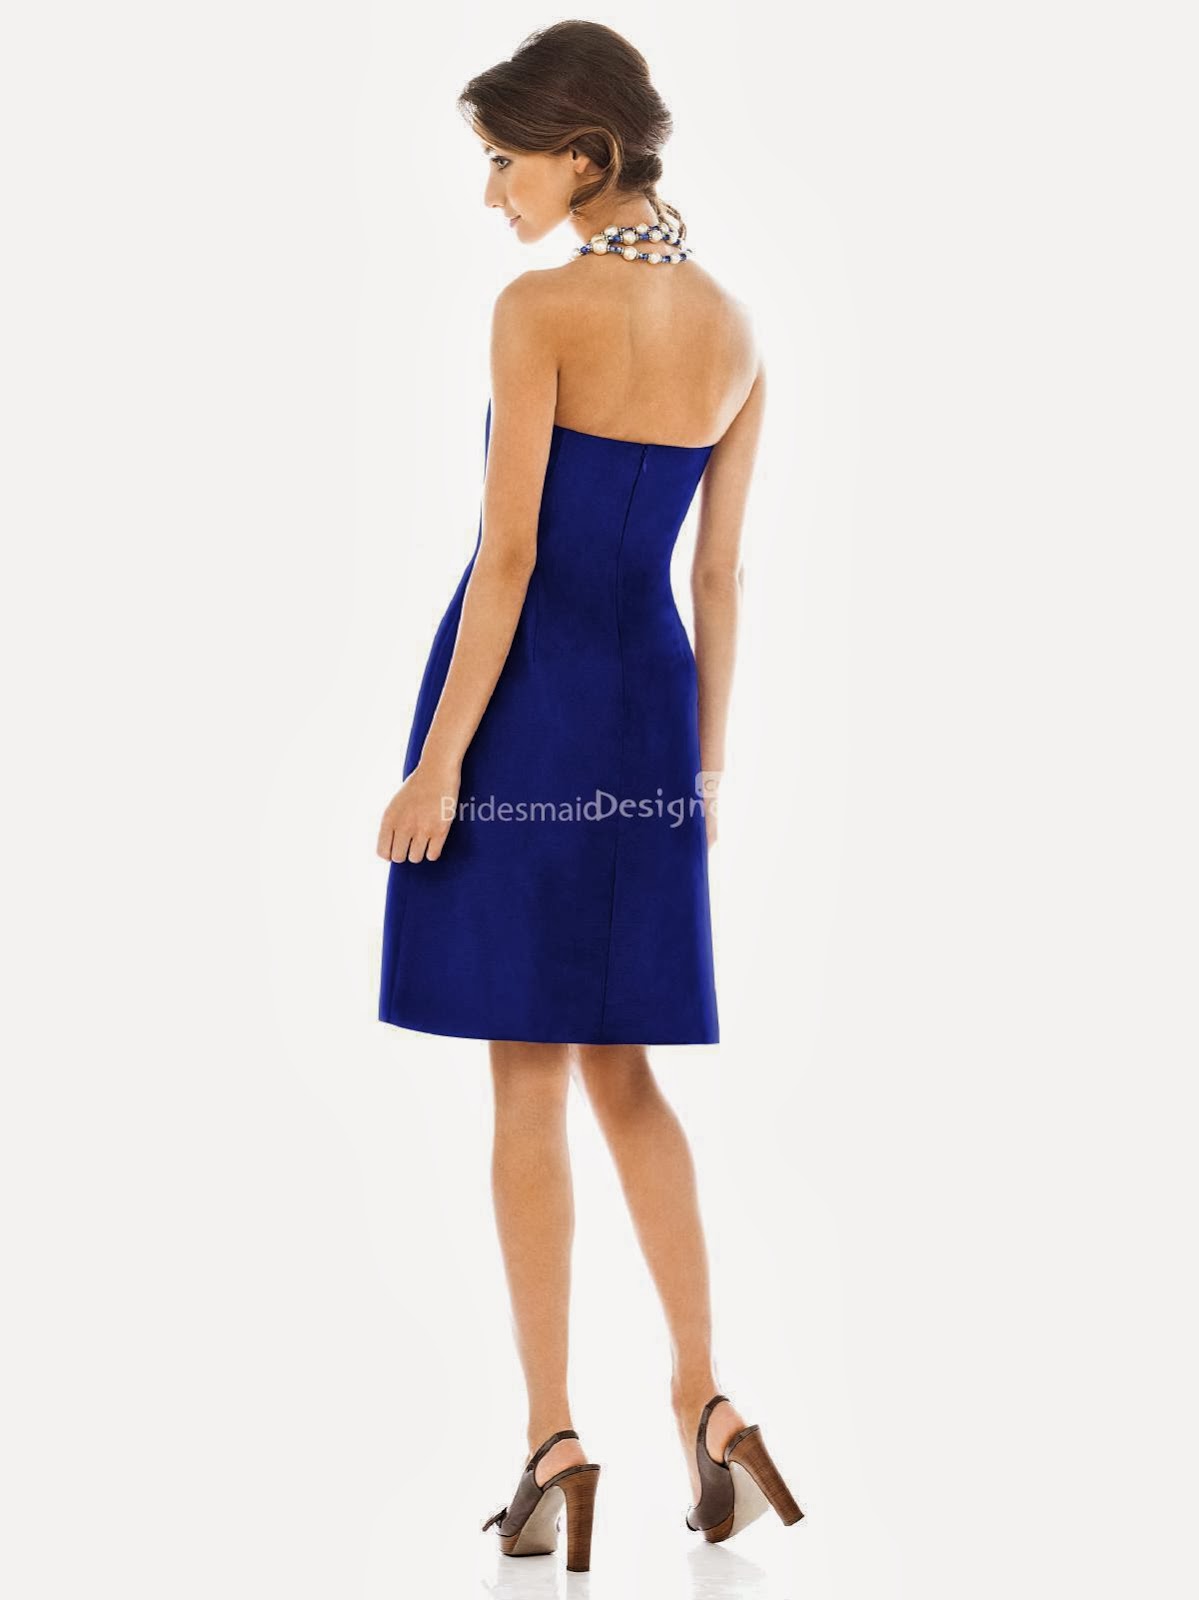 http://www.bridesmaiddesigners.com/dramatic-royal-blue-sleeveless-knee-length-a-line-pleated-bridesmaid-dress-with-pocket-666.html